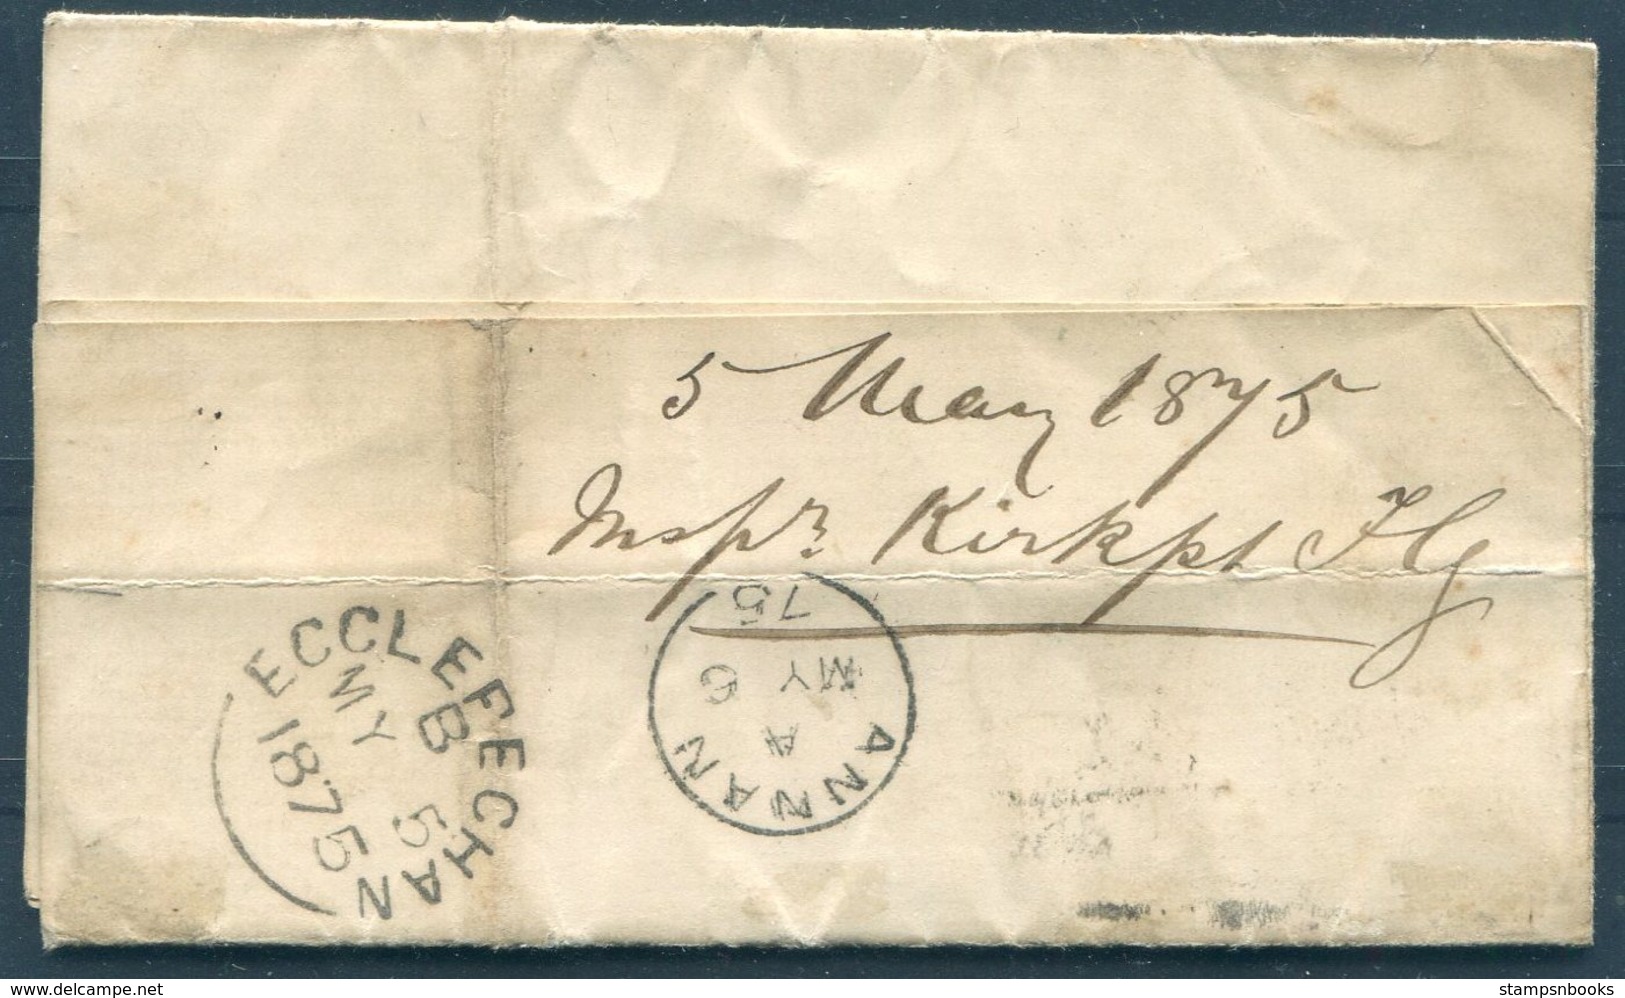 1875 GB Scotland Kirkpatrick Fleming Parish Parochial Board Poorhouse Meeting Entire - Annan Via Ecclebechan - Storia Postale